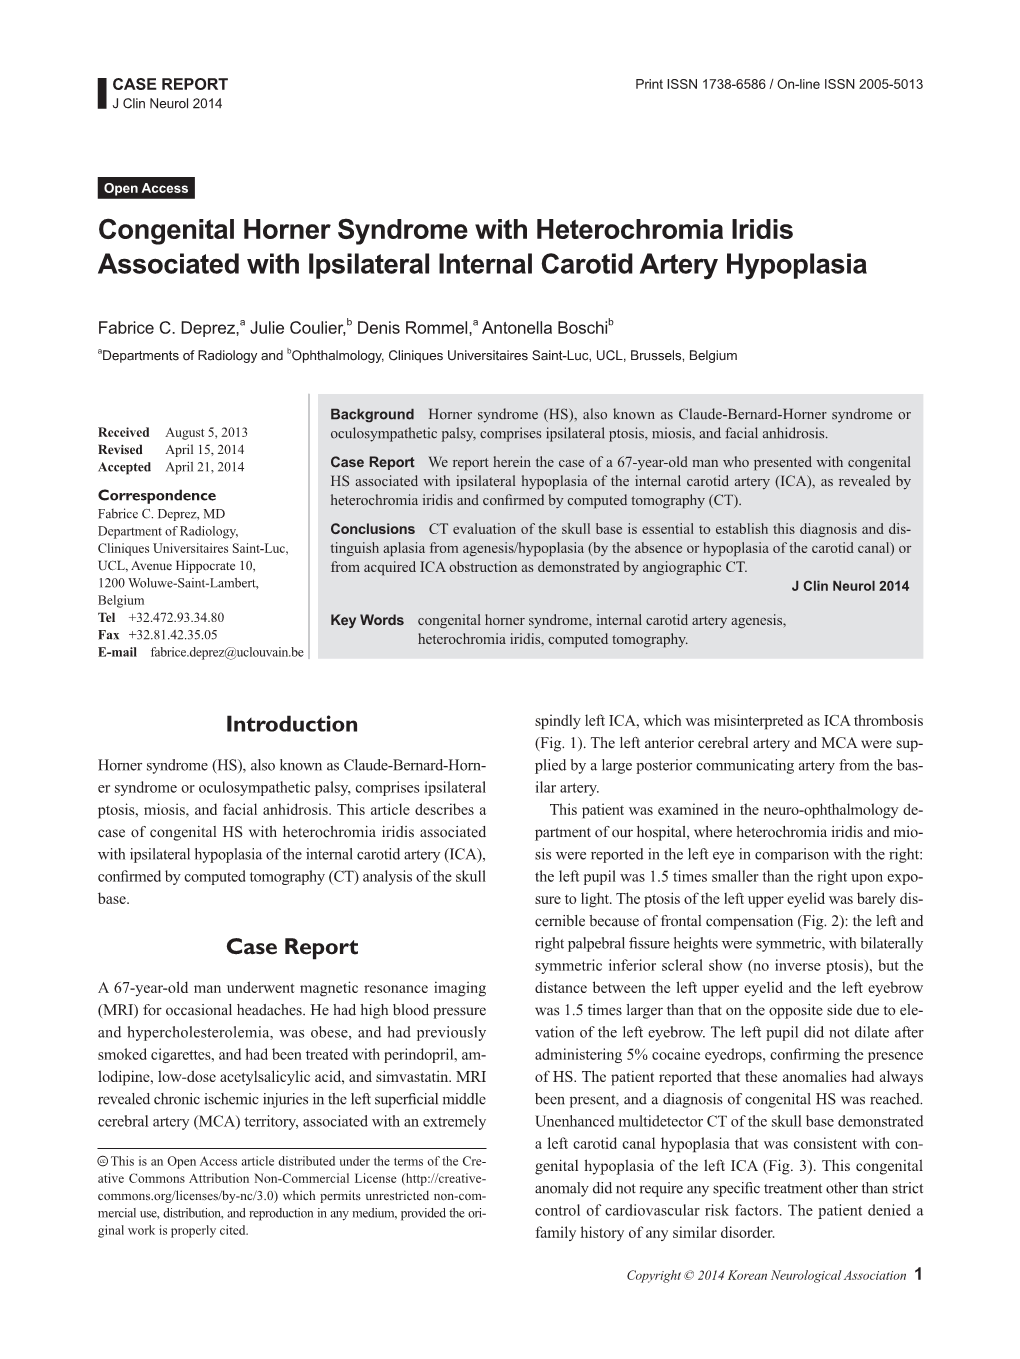 Congenital Horner Syndrome with Heterochromia Iridis Associated with Ipsilateral Internal Carotid Artery Hypoplasia